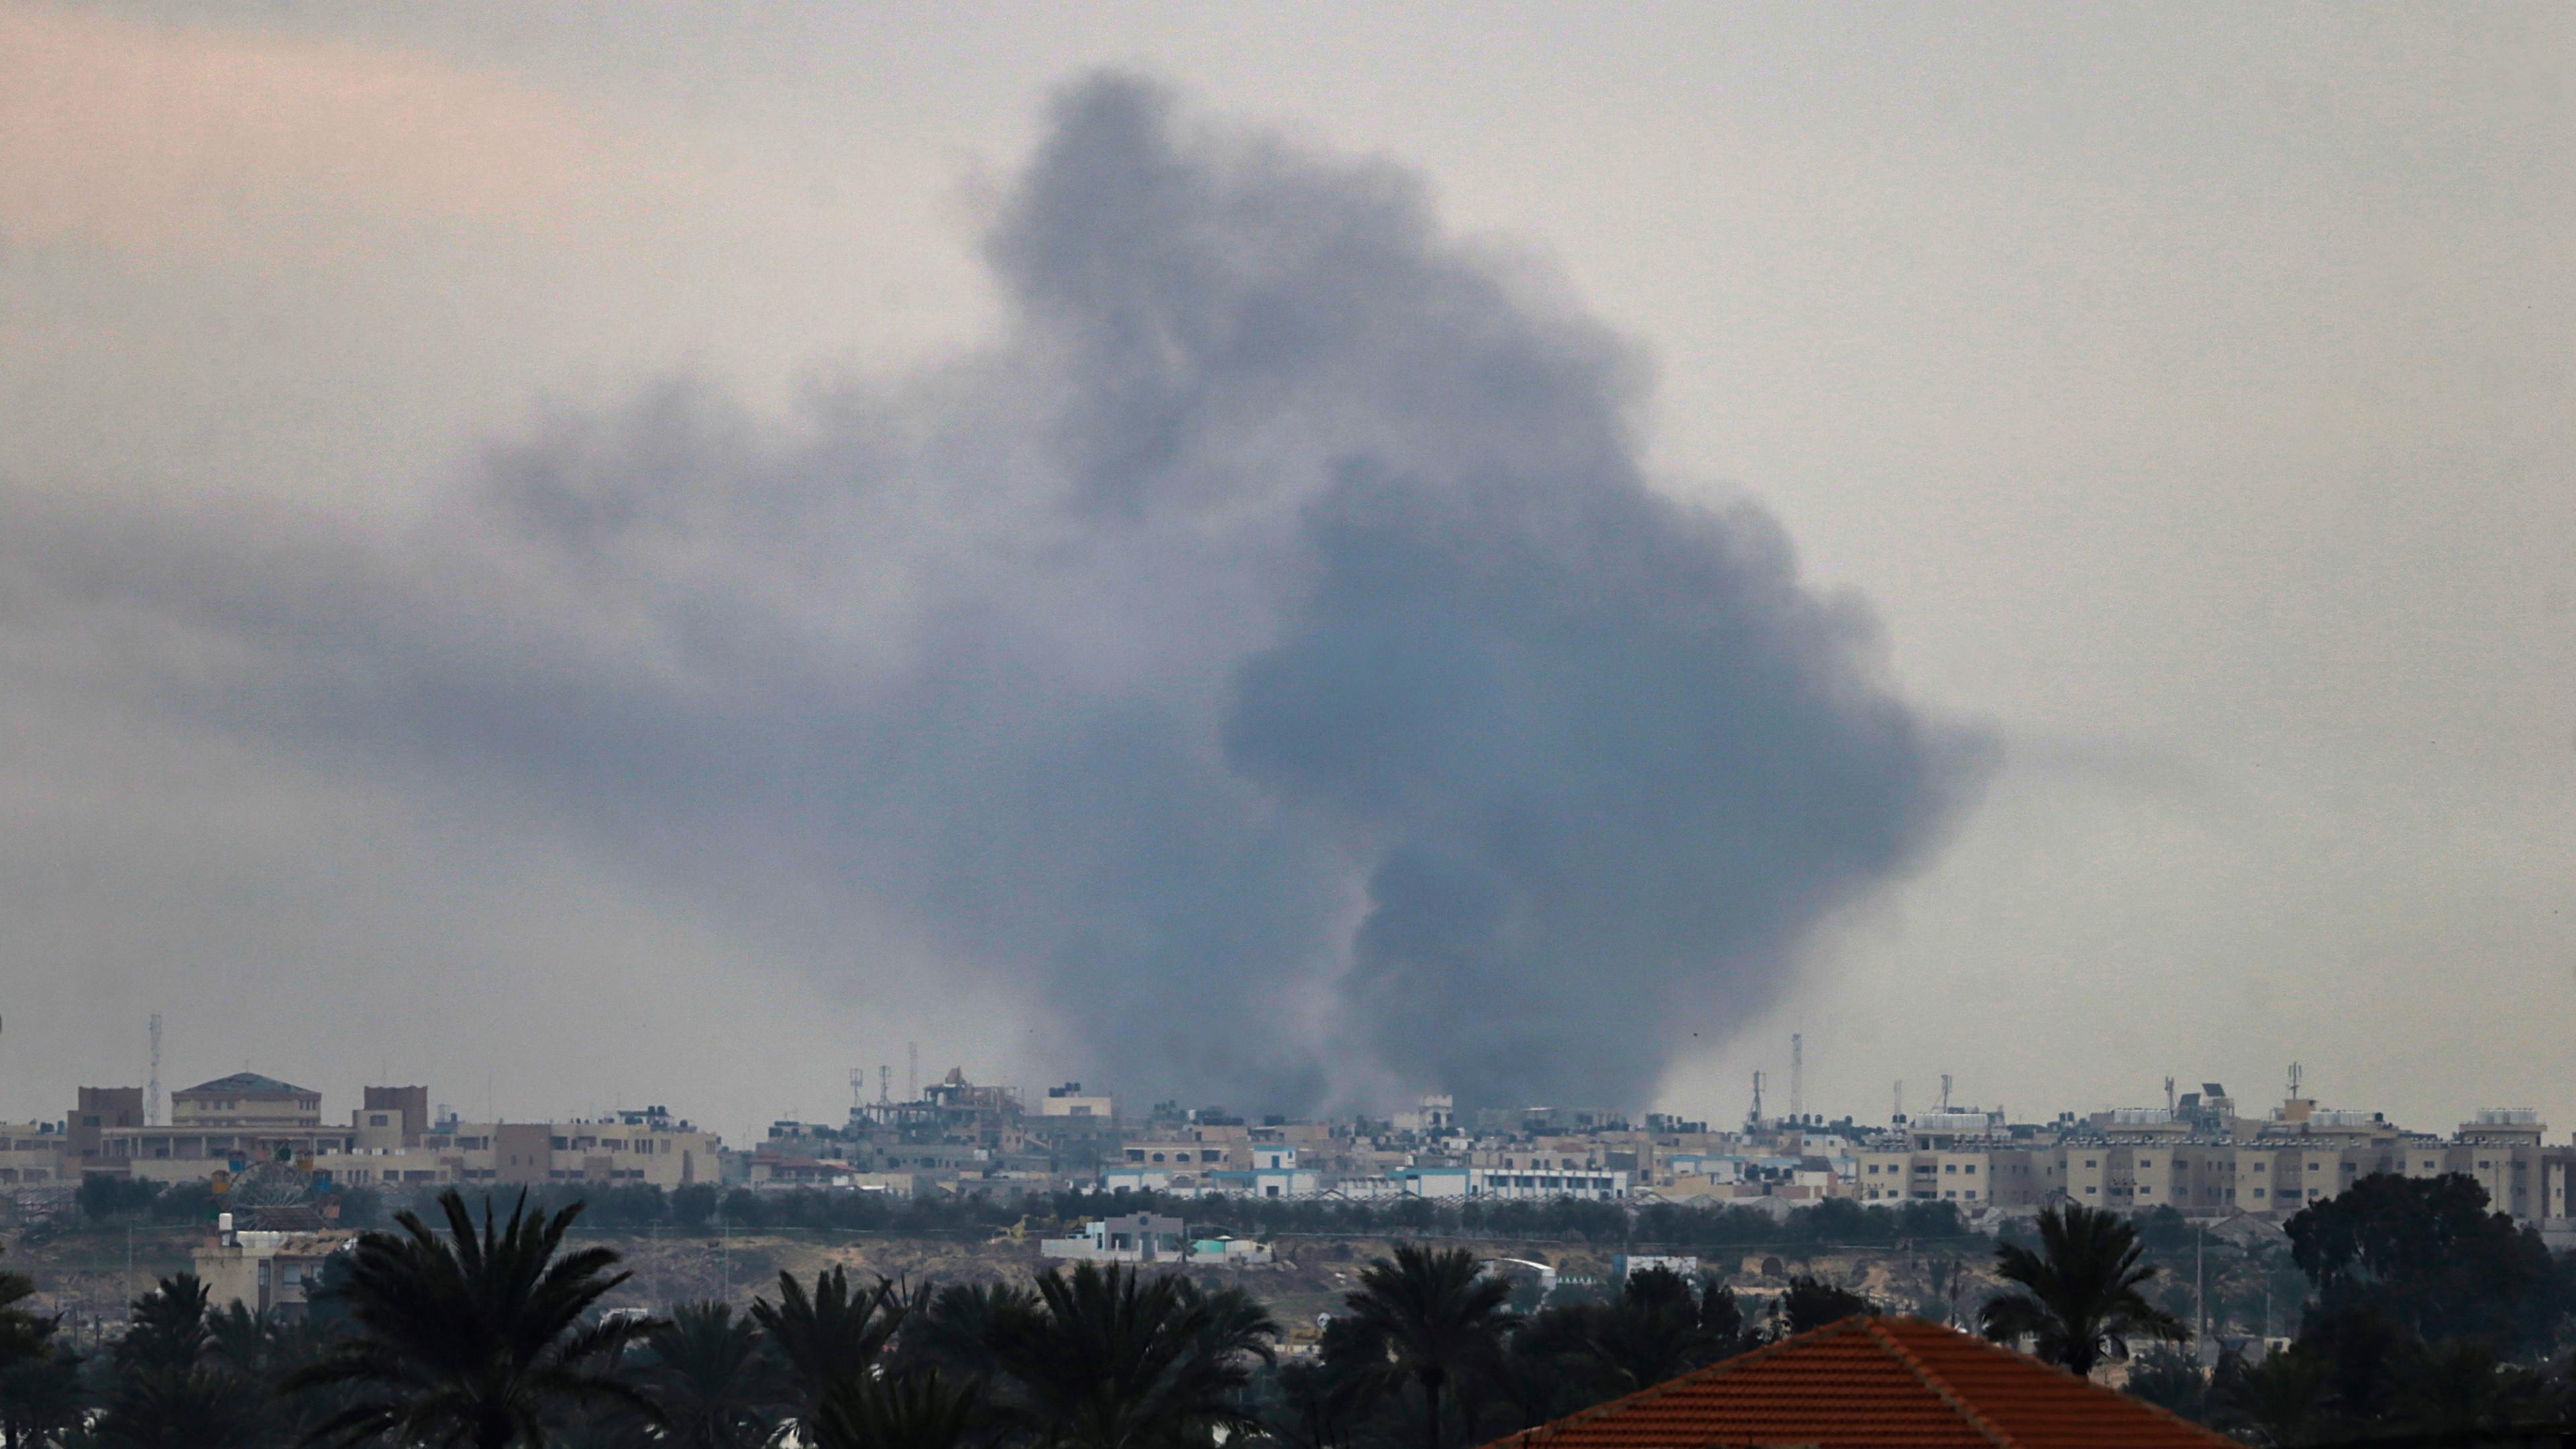 Rafah residents evacuate as Israeli ground offensive looms